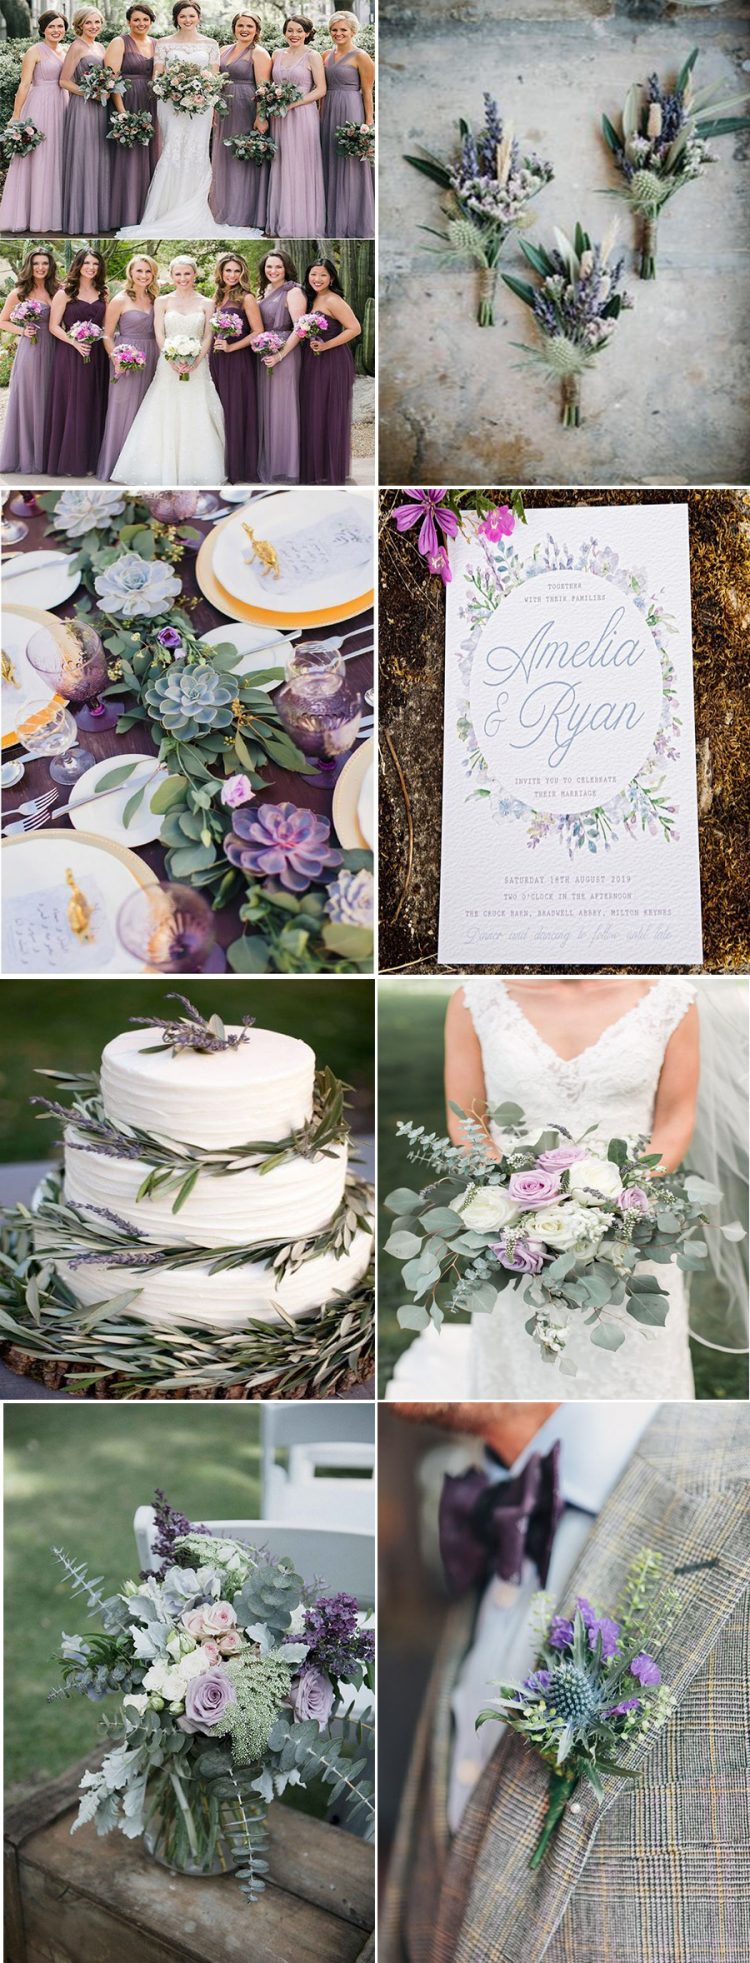 A Dreamy Green & Lavender Palette | weddingsonline